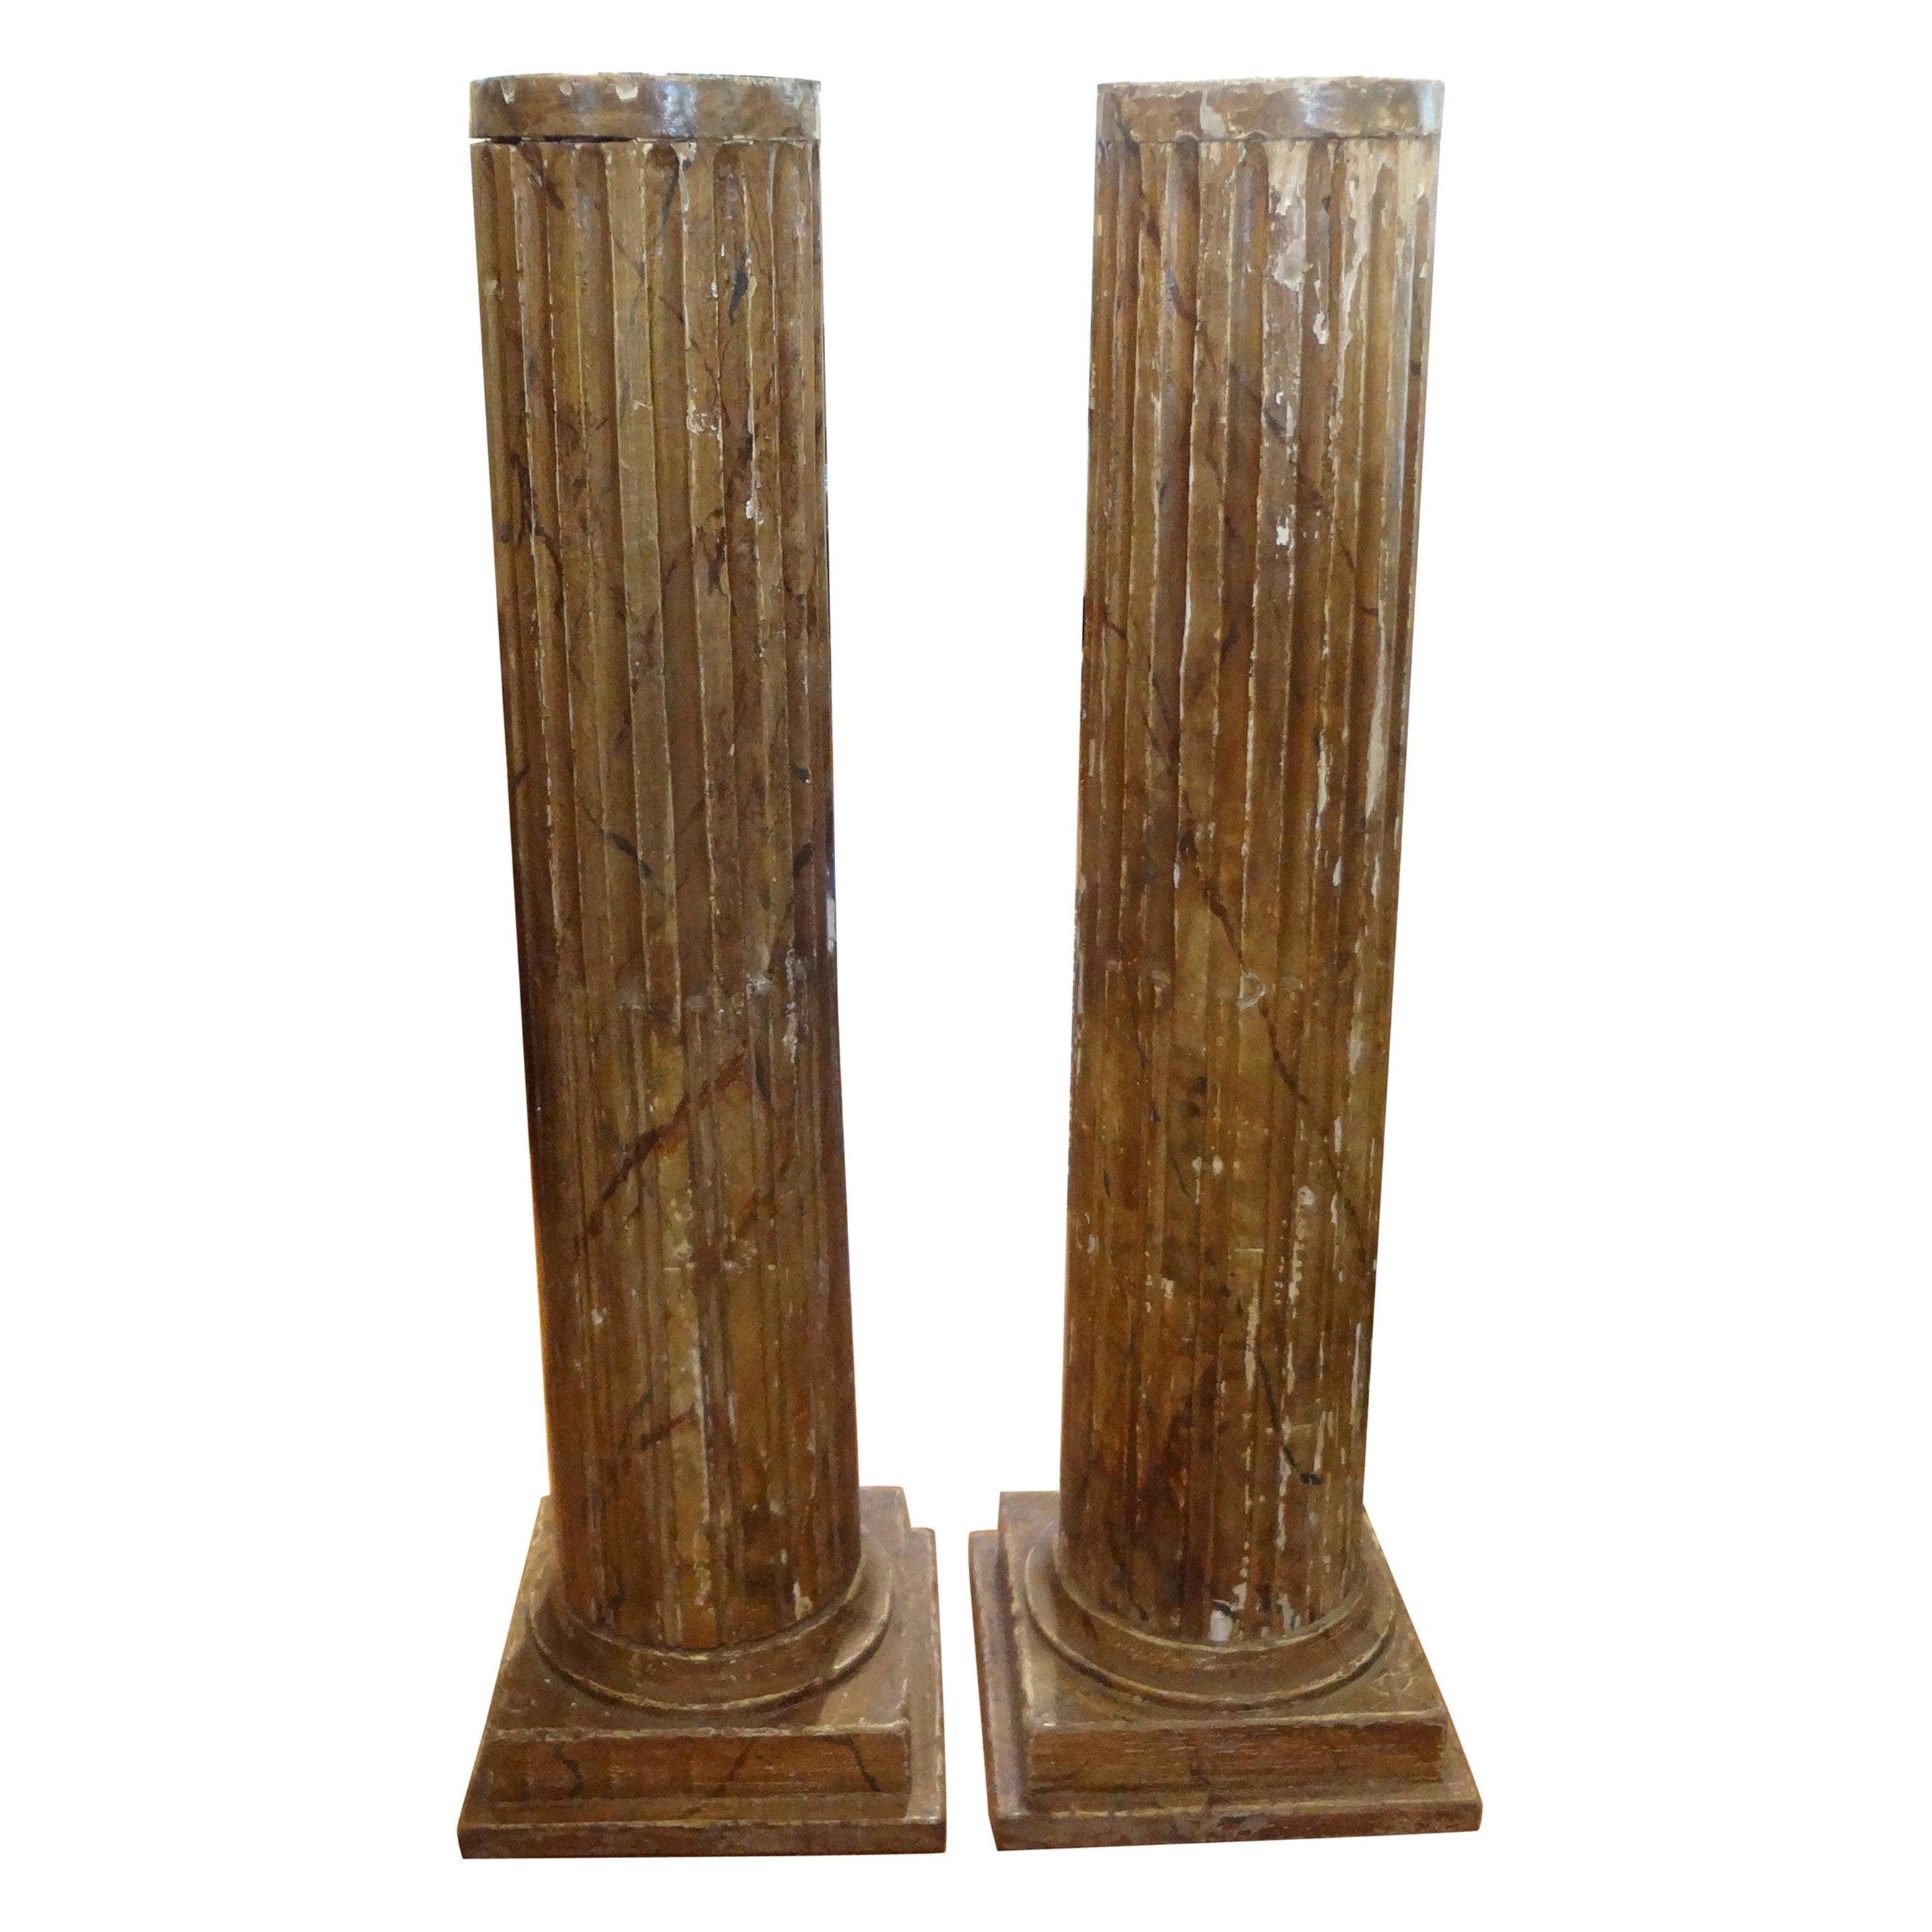 Paar französische Louis-XVI-Säulensockel aus geschnitztem Holz aus dem 18. Jahrhundert